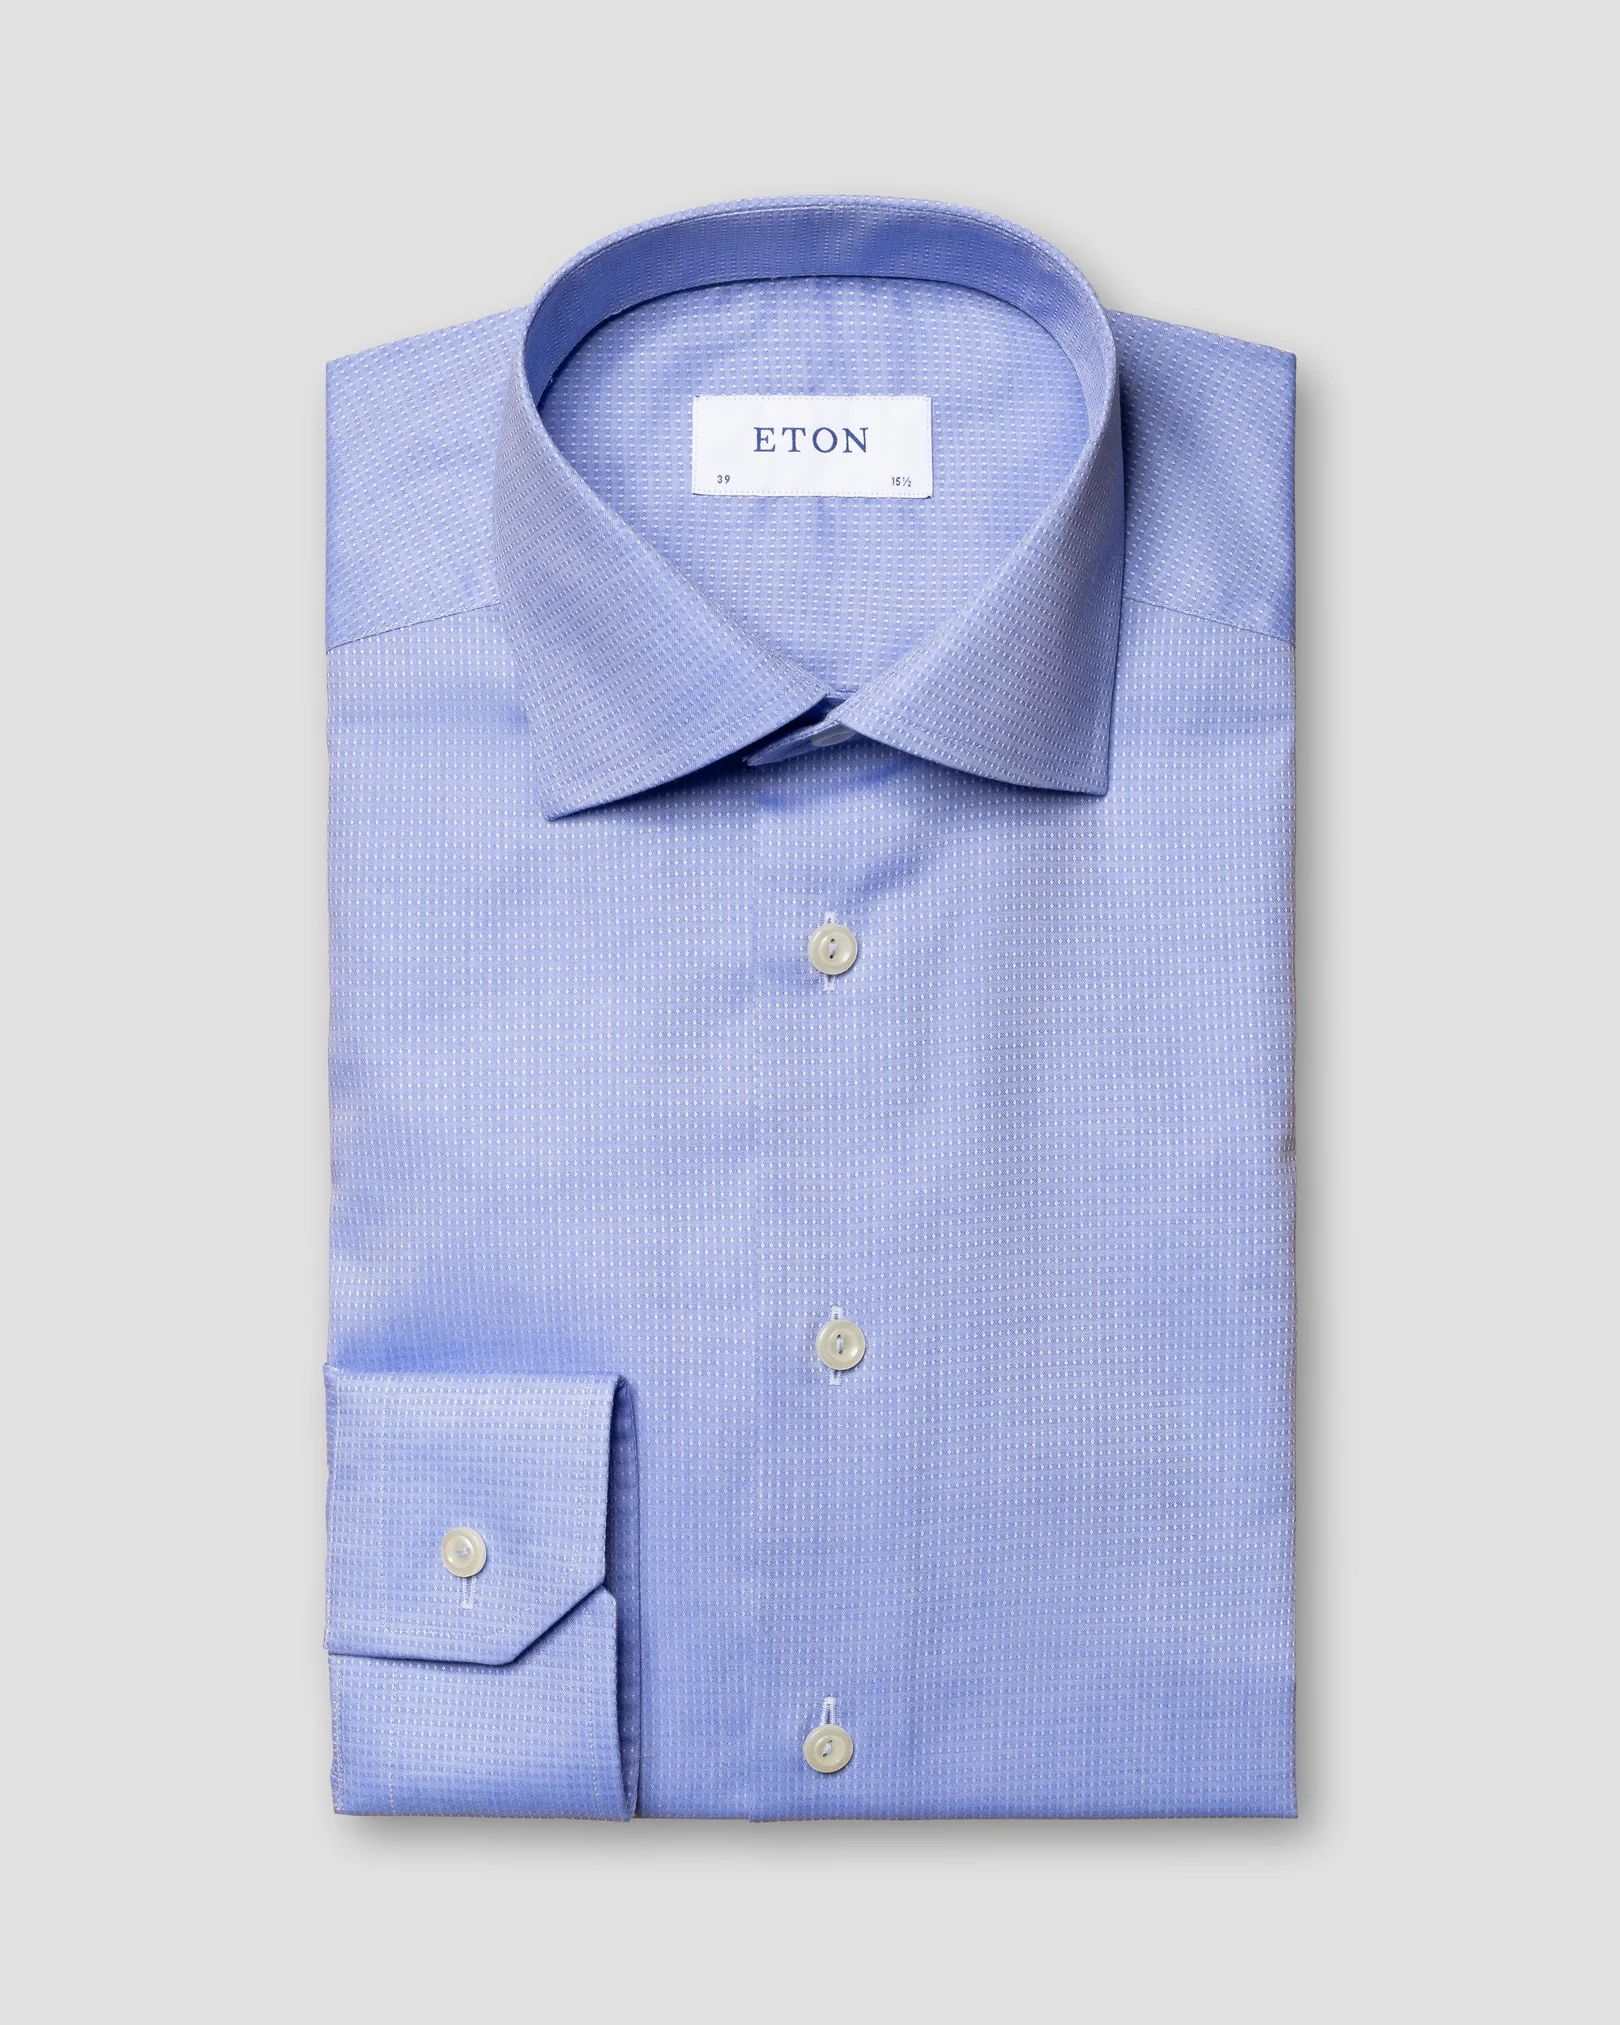 Eton - mid blue pin dot twill shirt